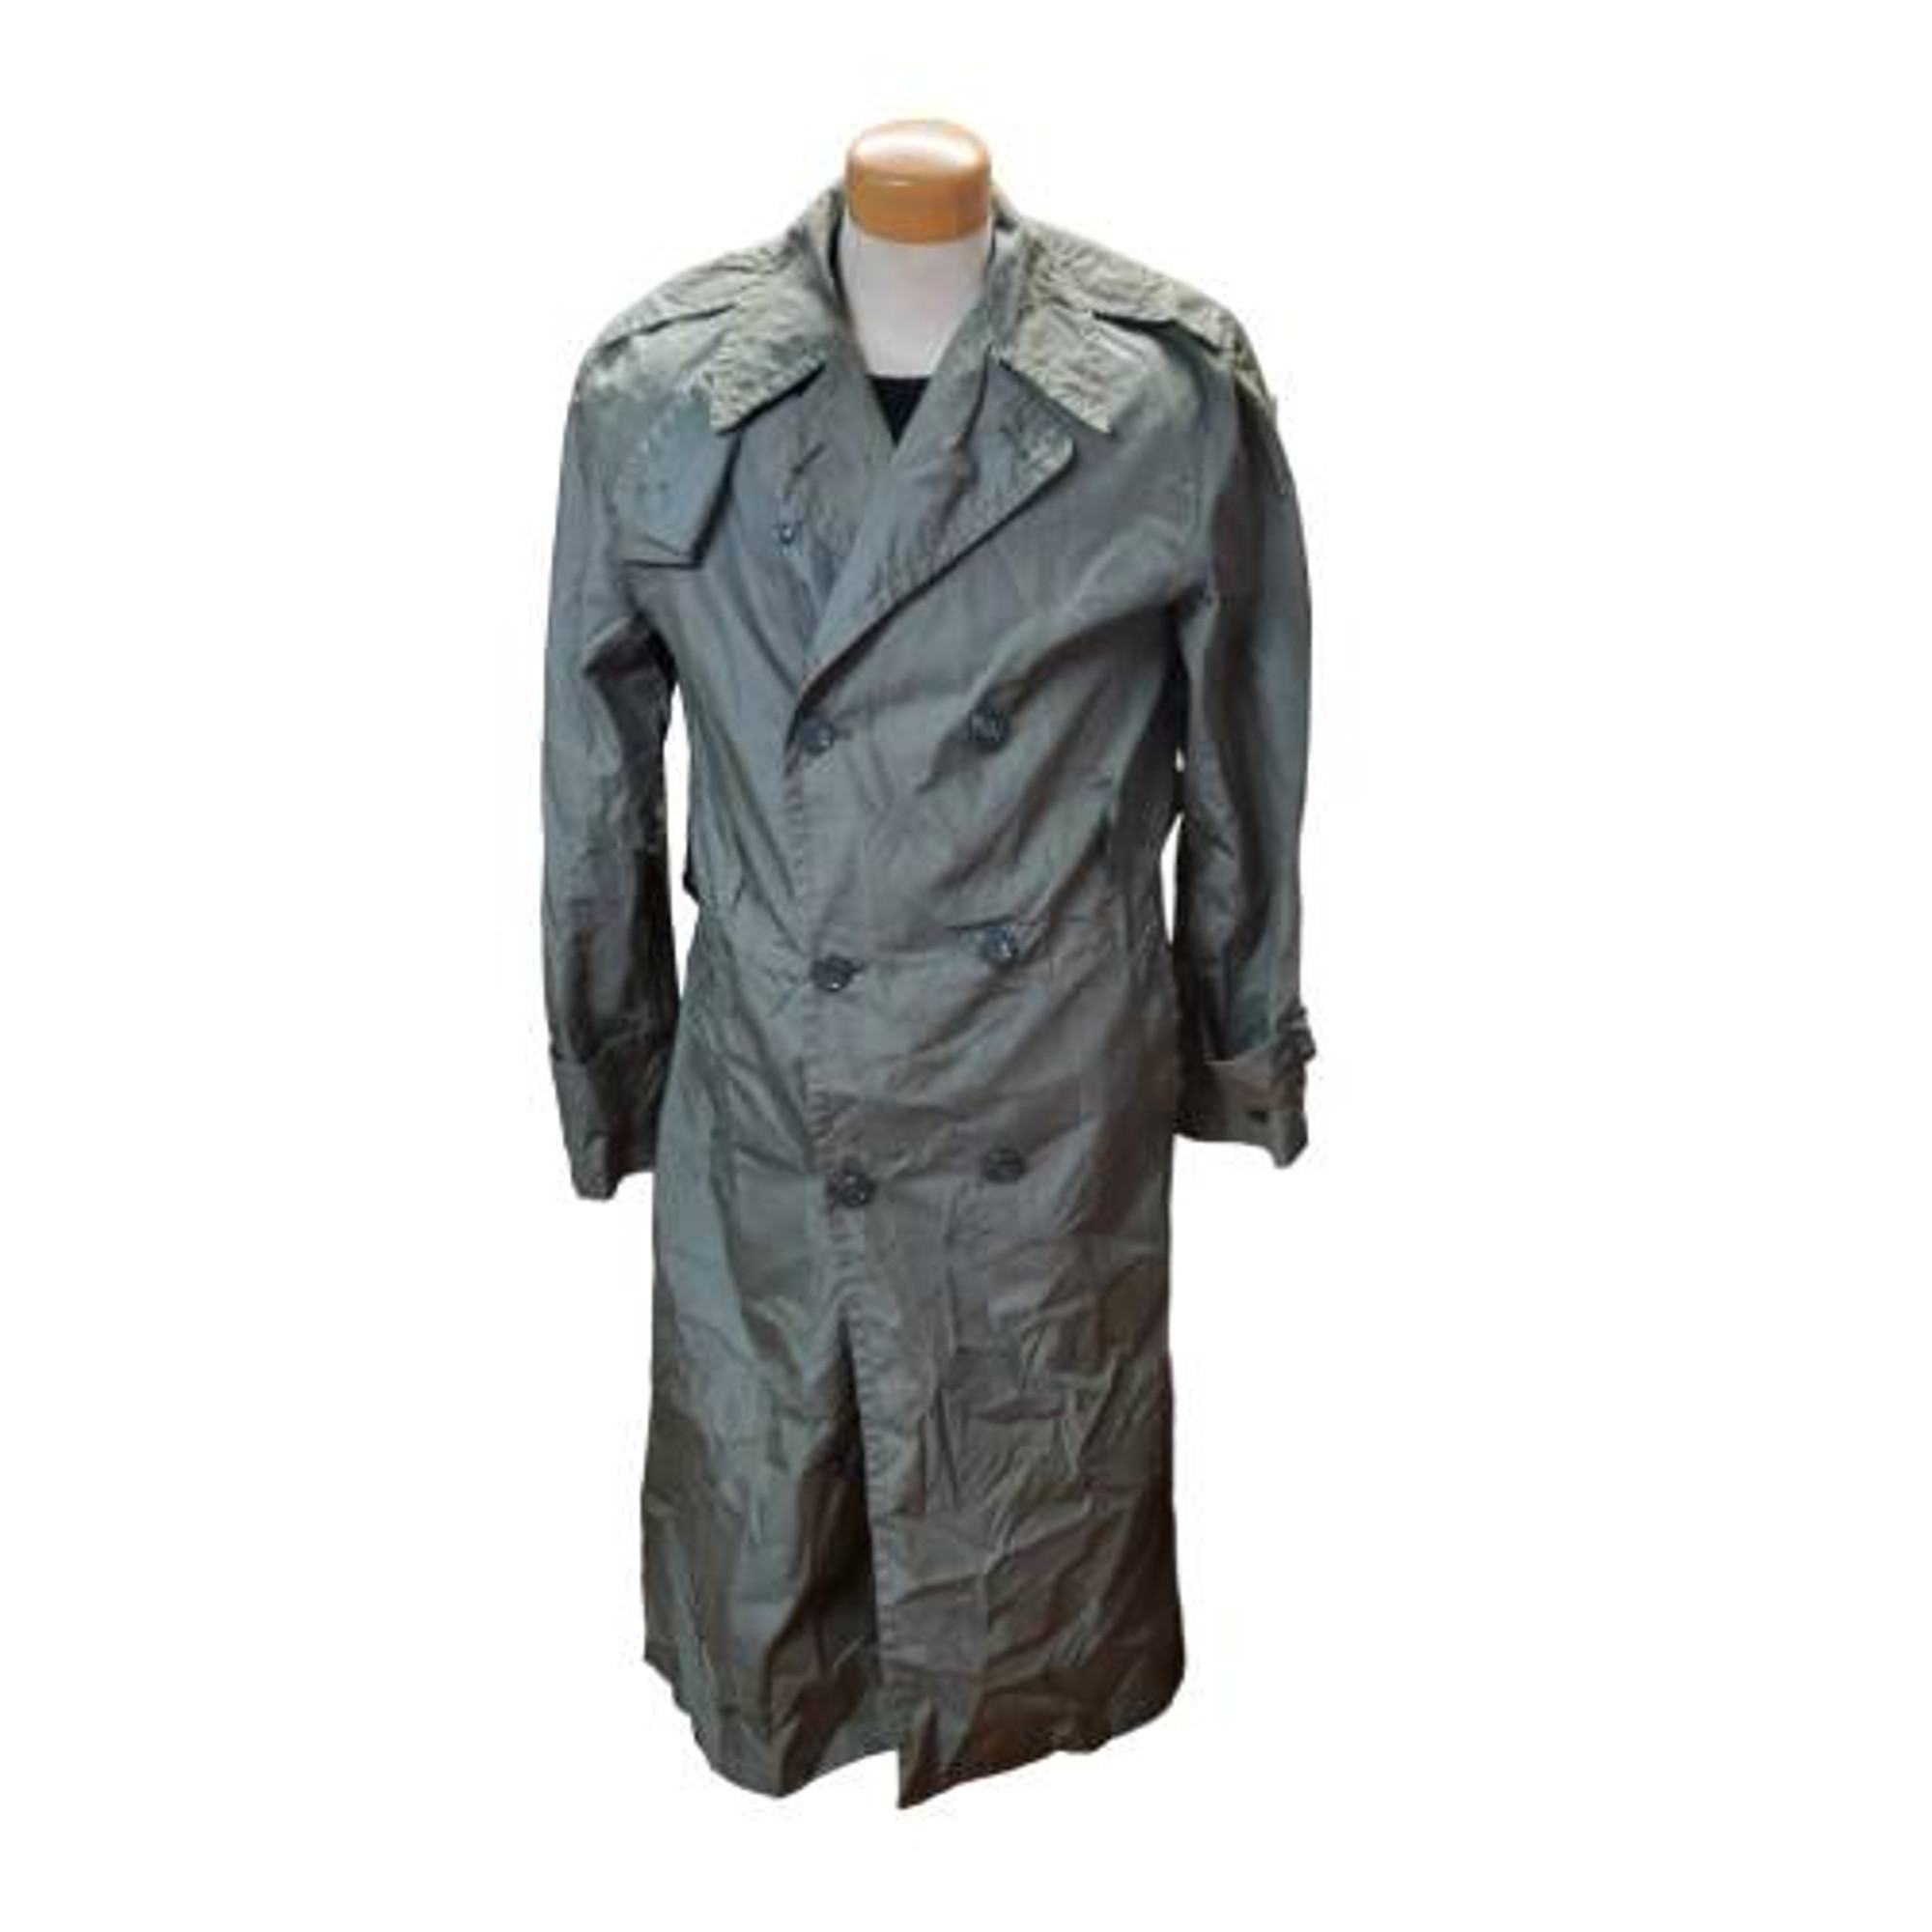 U.S. - Armed Forces Quarpel Raincoat